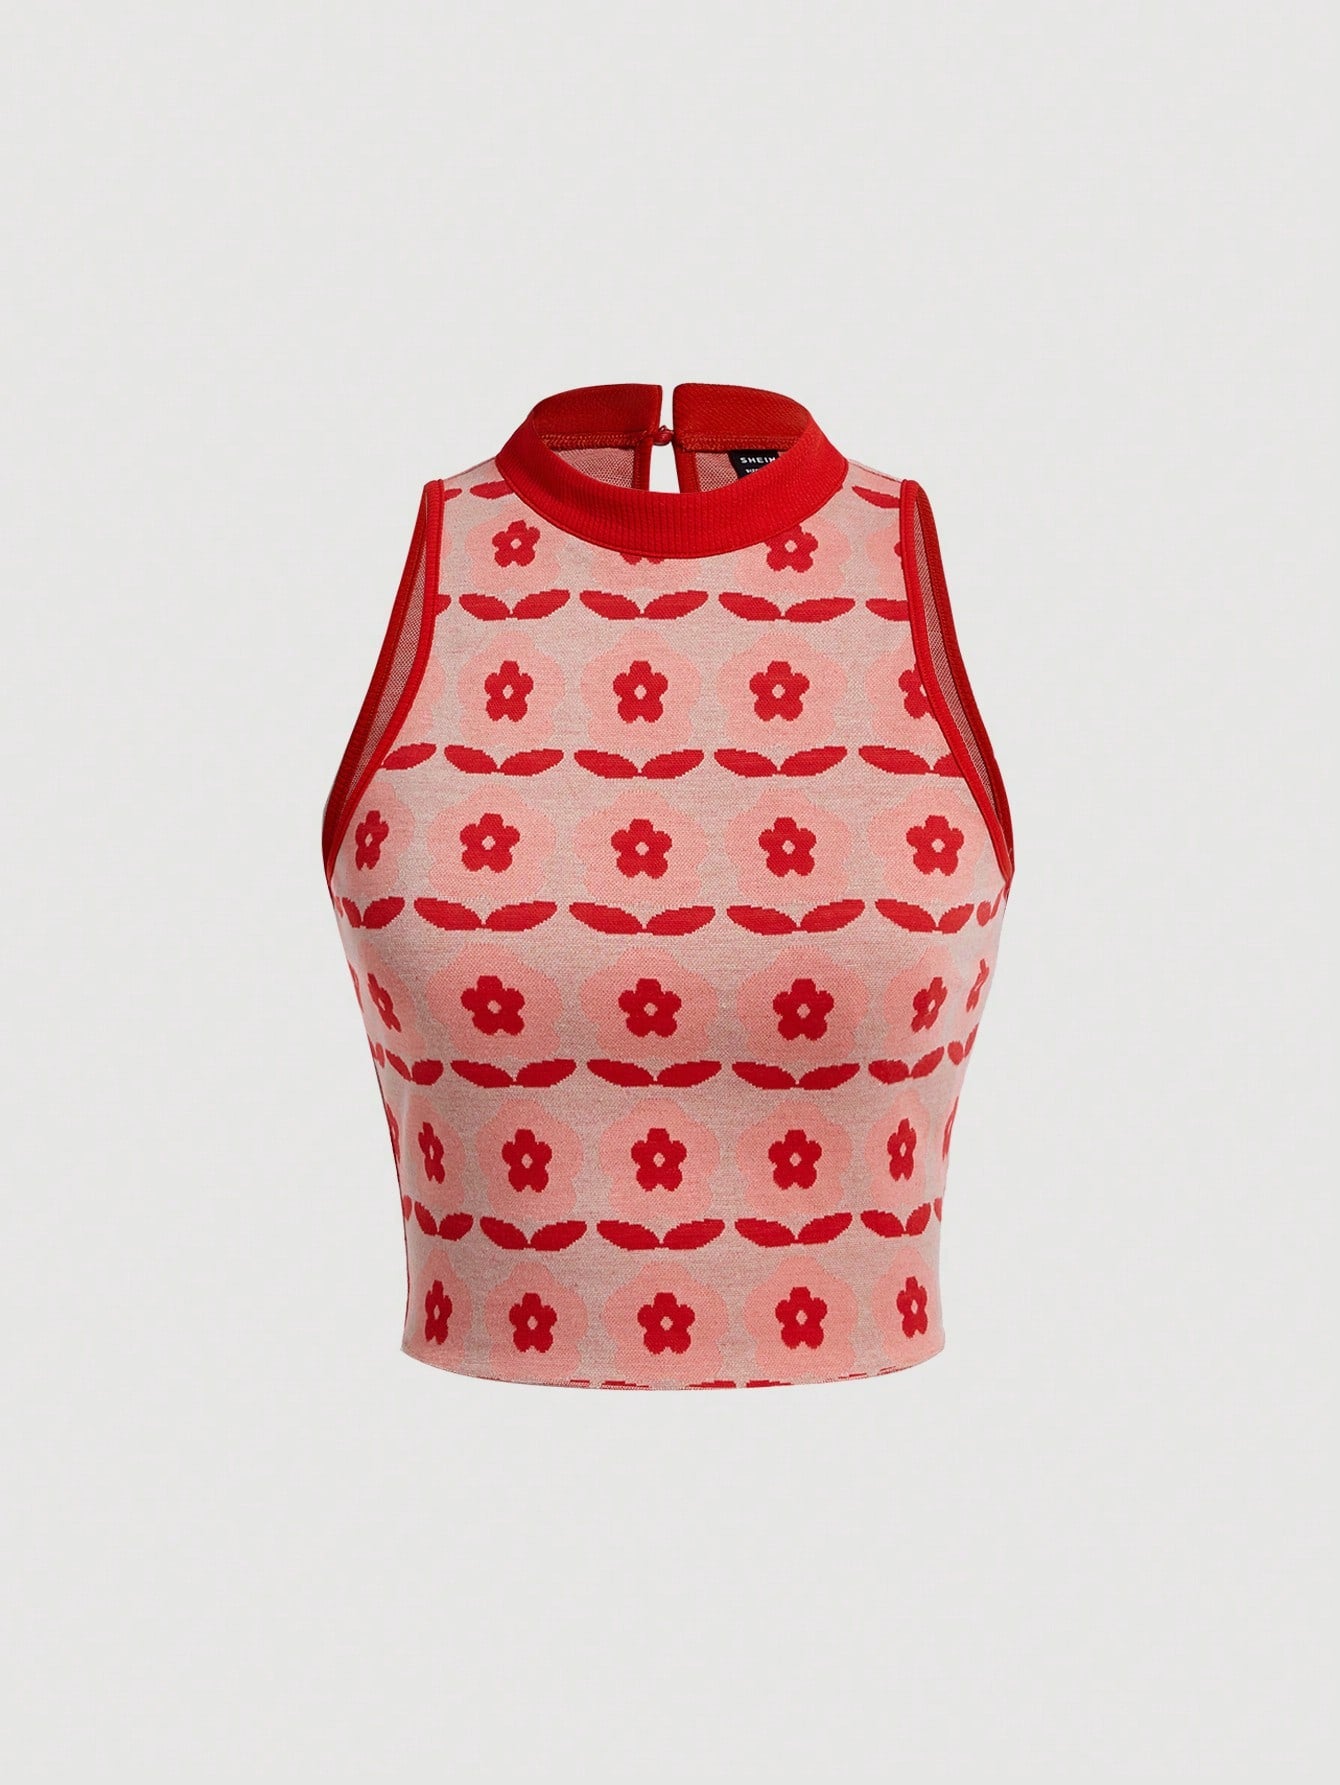 Red Vintage Flower Pattern Knit Women's Tank Top For Summer